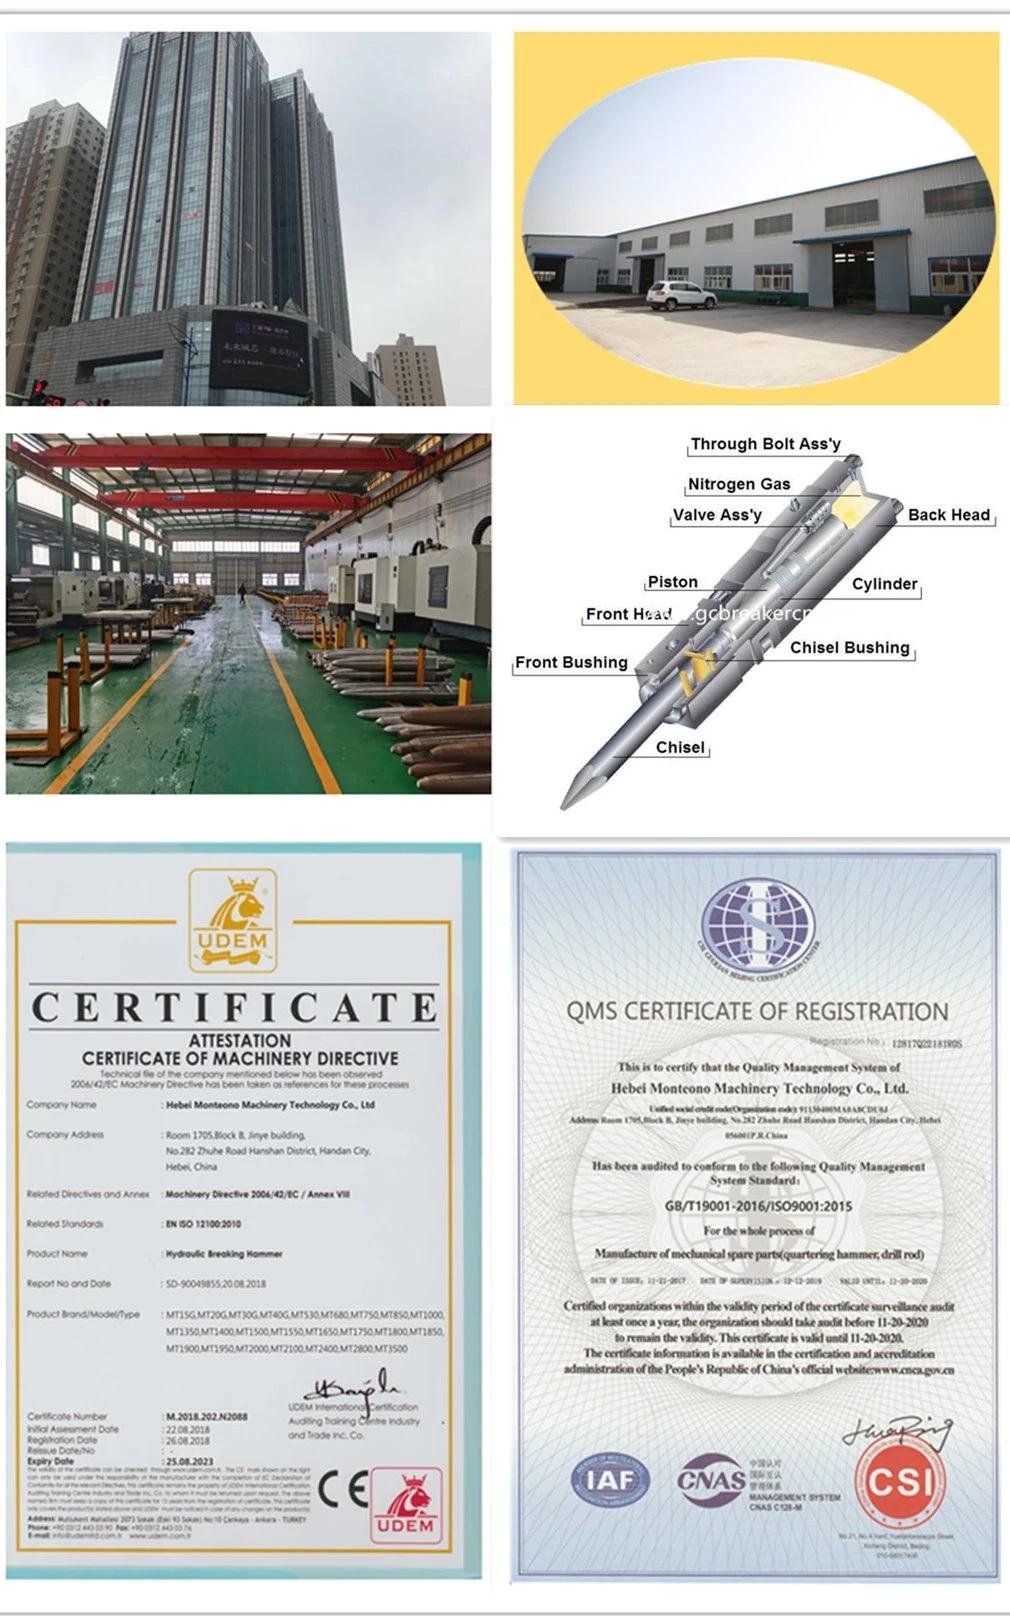 Cat Jcb Doosan Lovol Concrete Vibrating Compactor Hydraulic Plate Compactor